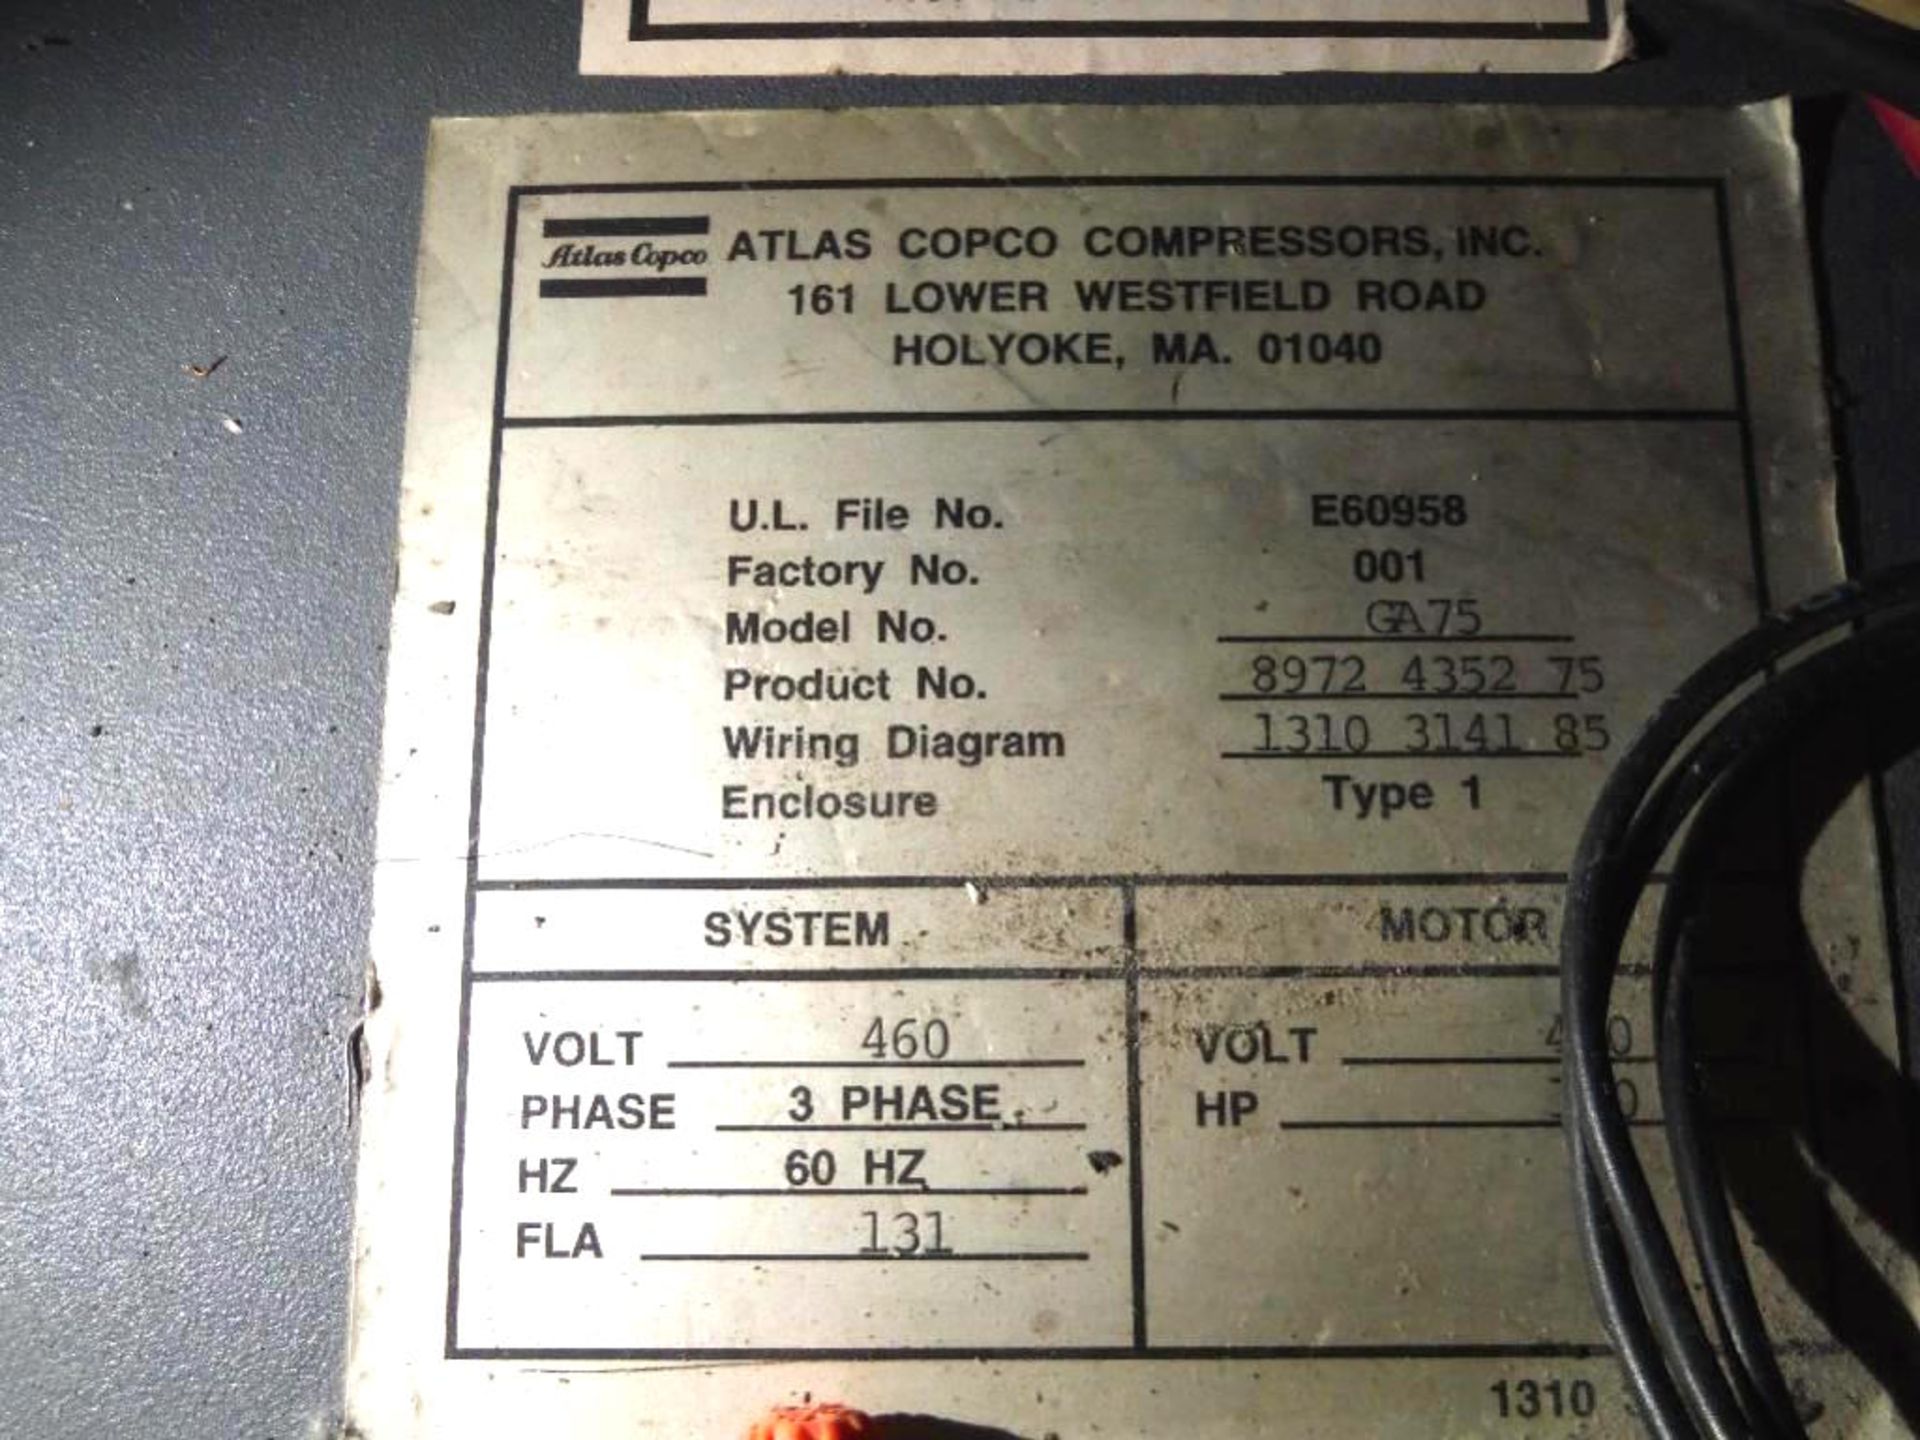 Atlas Copco GA75 Air Compressor Serial: 8972435275, 75 Horsepower Compressor, Last used at a - Image 5 of 6